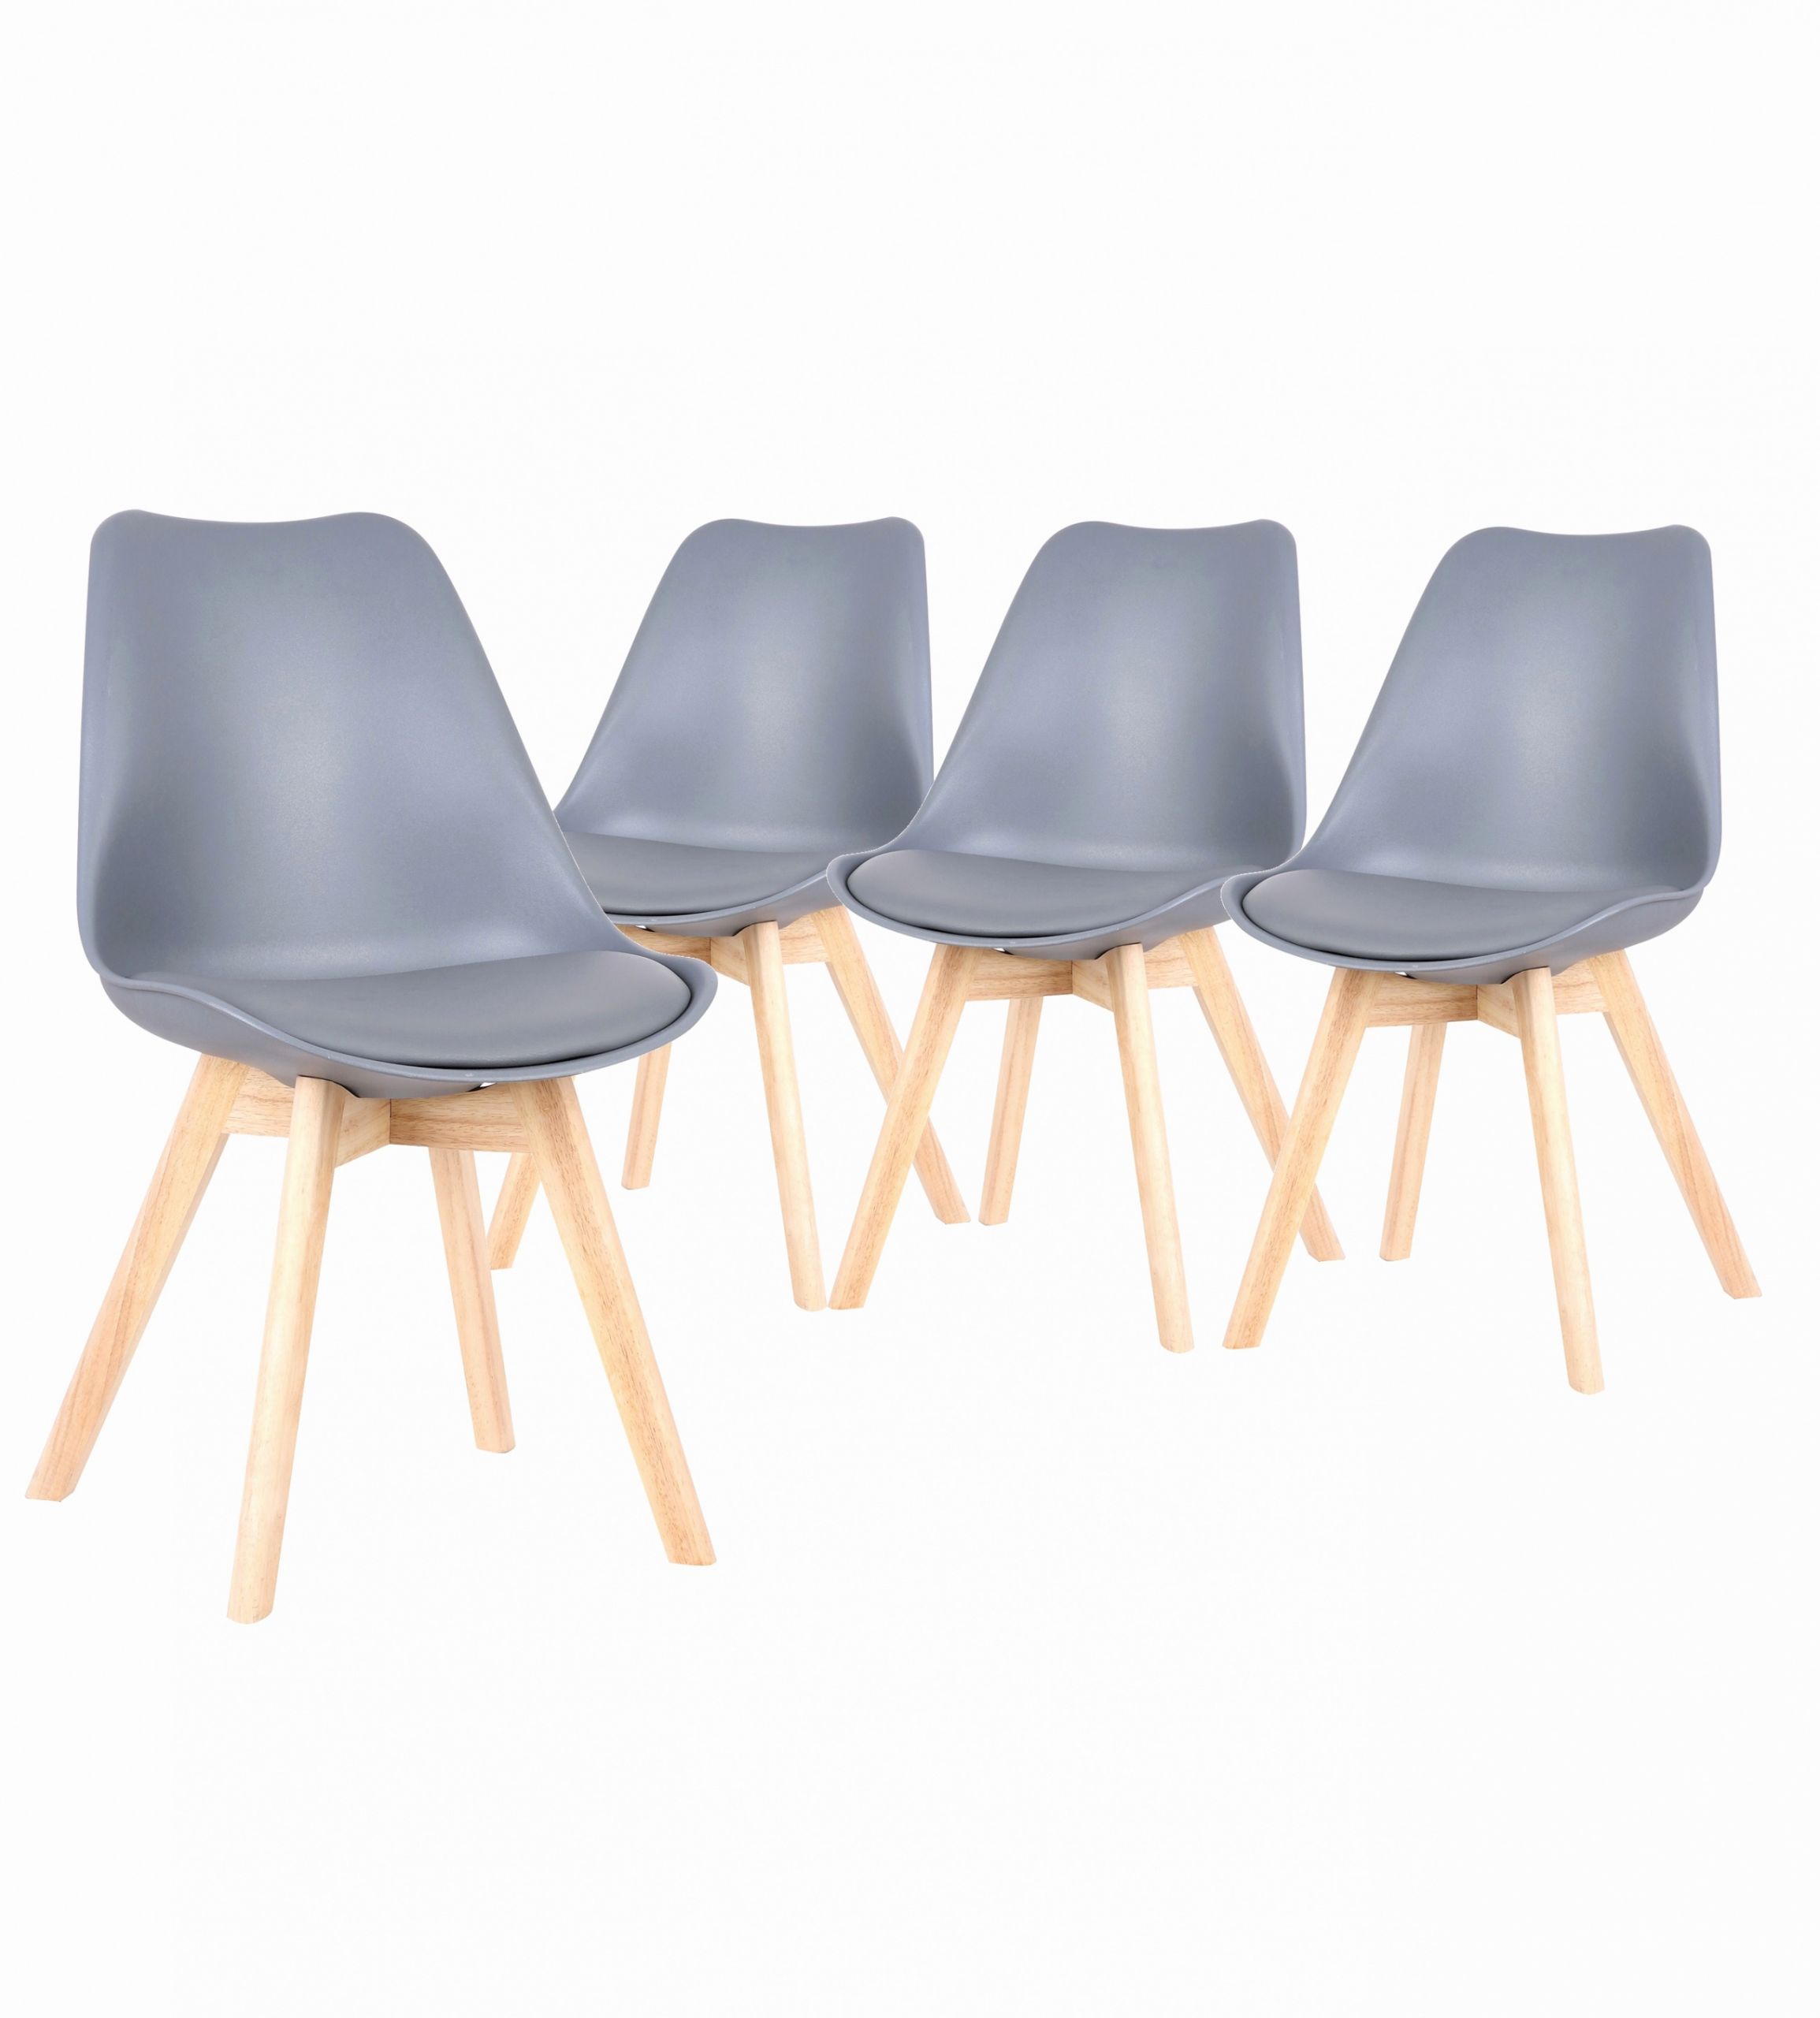 chaises scandinaves bois genial chaise scandinave jaune moutarde fauteuil scandinave moutarde fauteuil scandinave moutarde